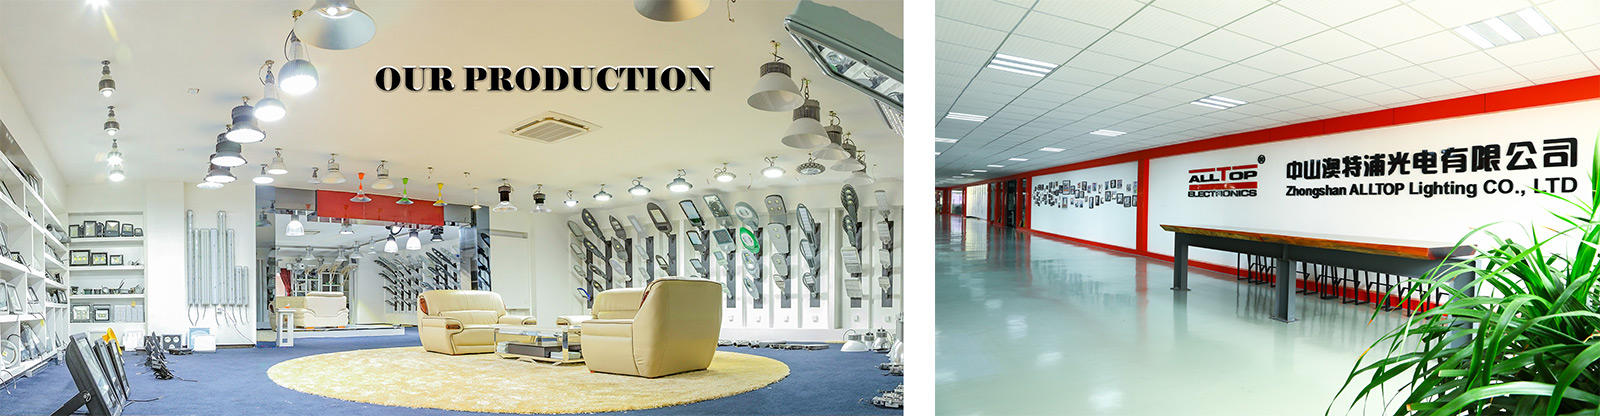 convenient indoor light fittings manufacturer